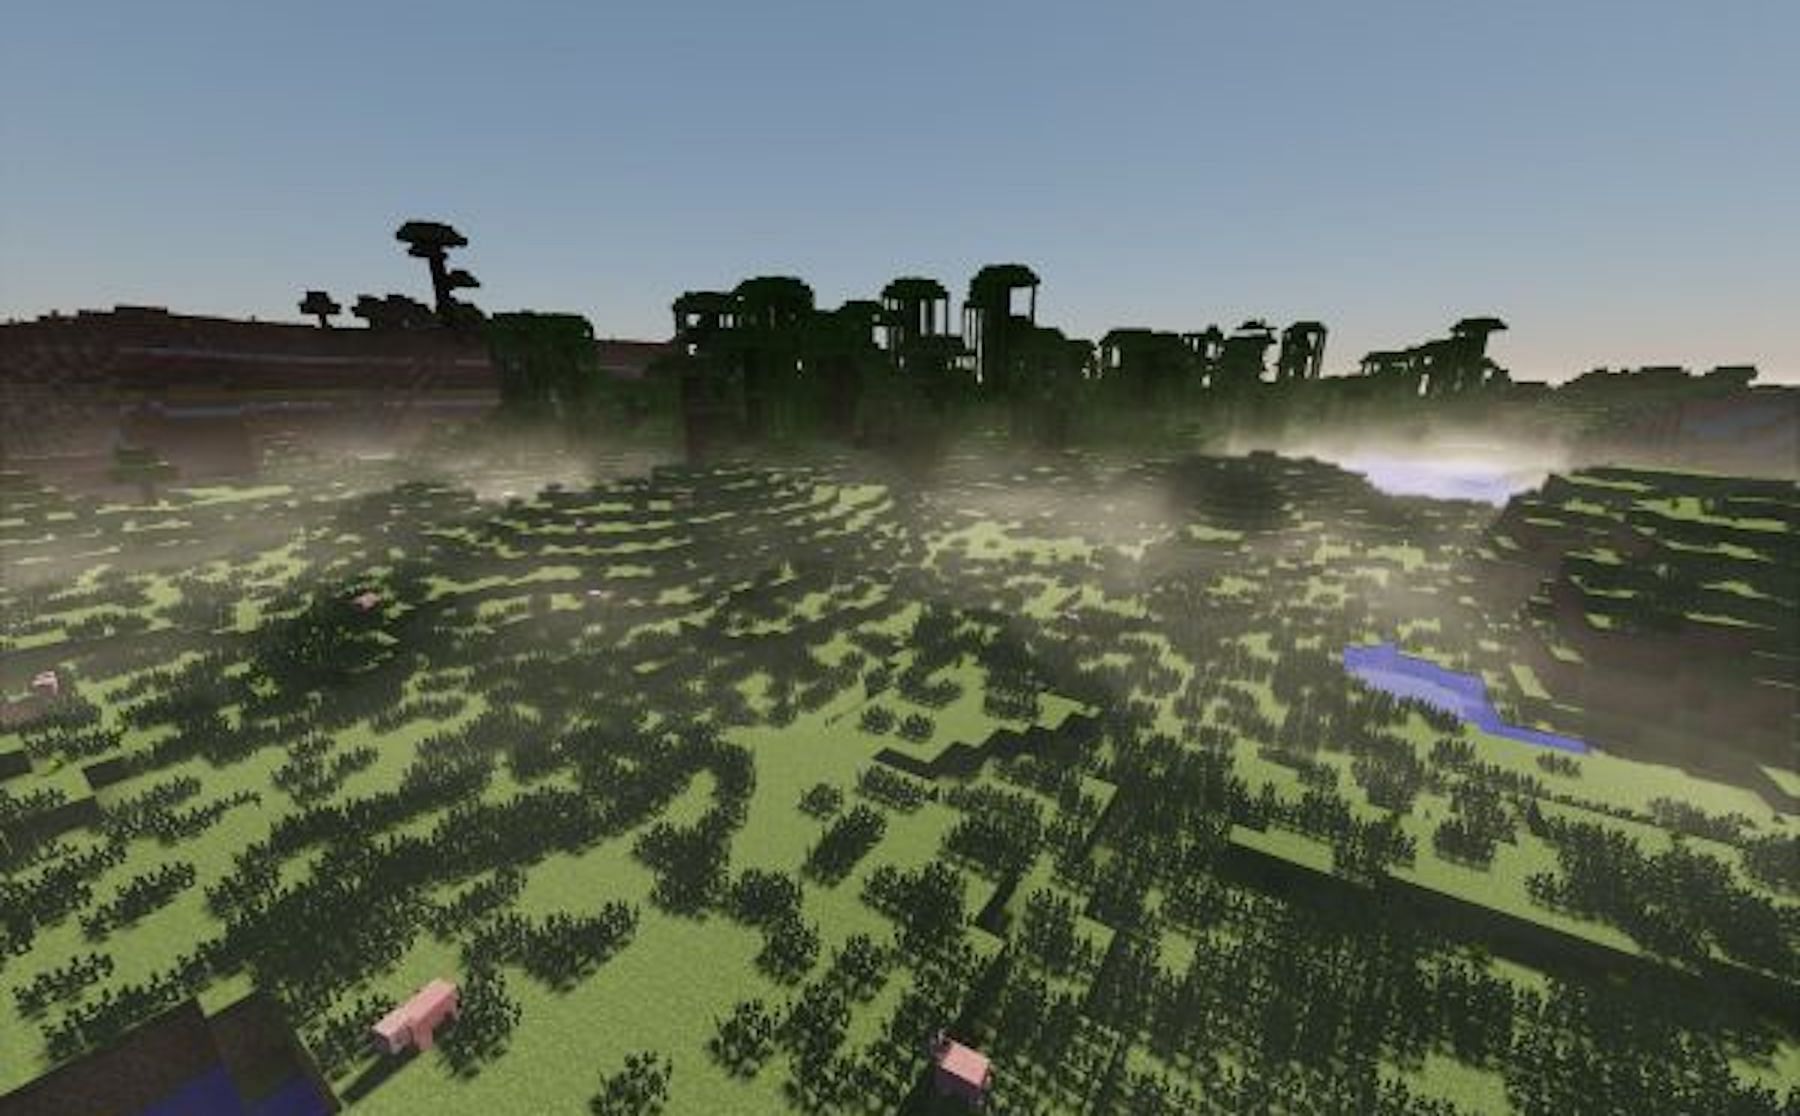 Magnificent Atmospheric Shaders running [Image via MinecraftStorage]